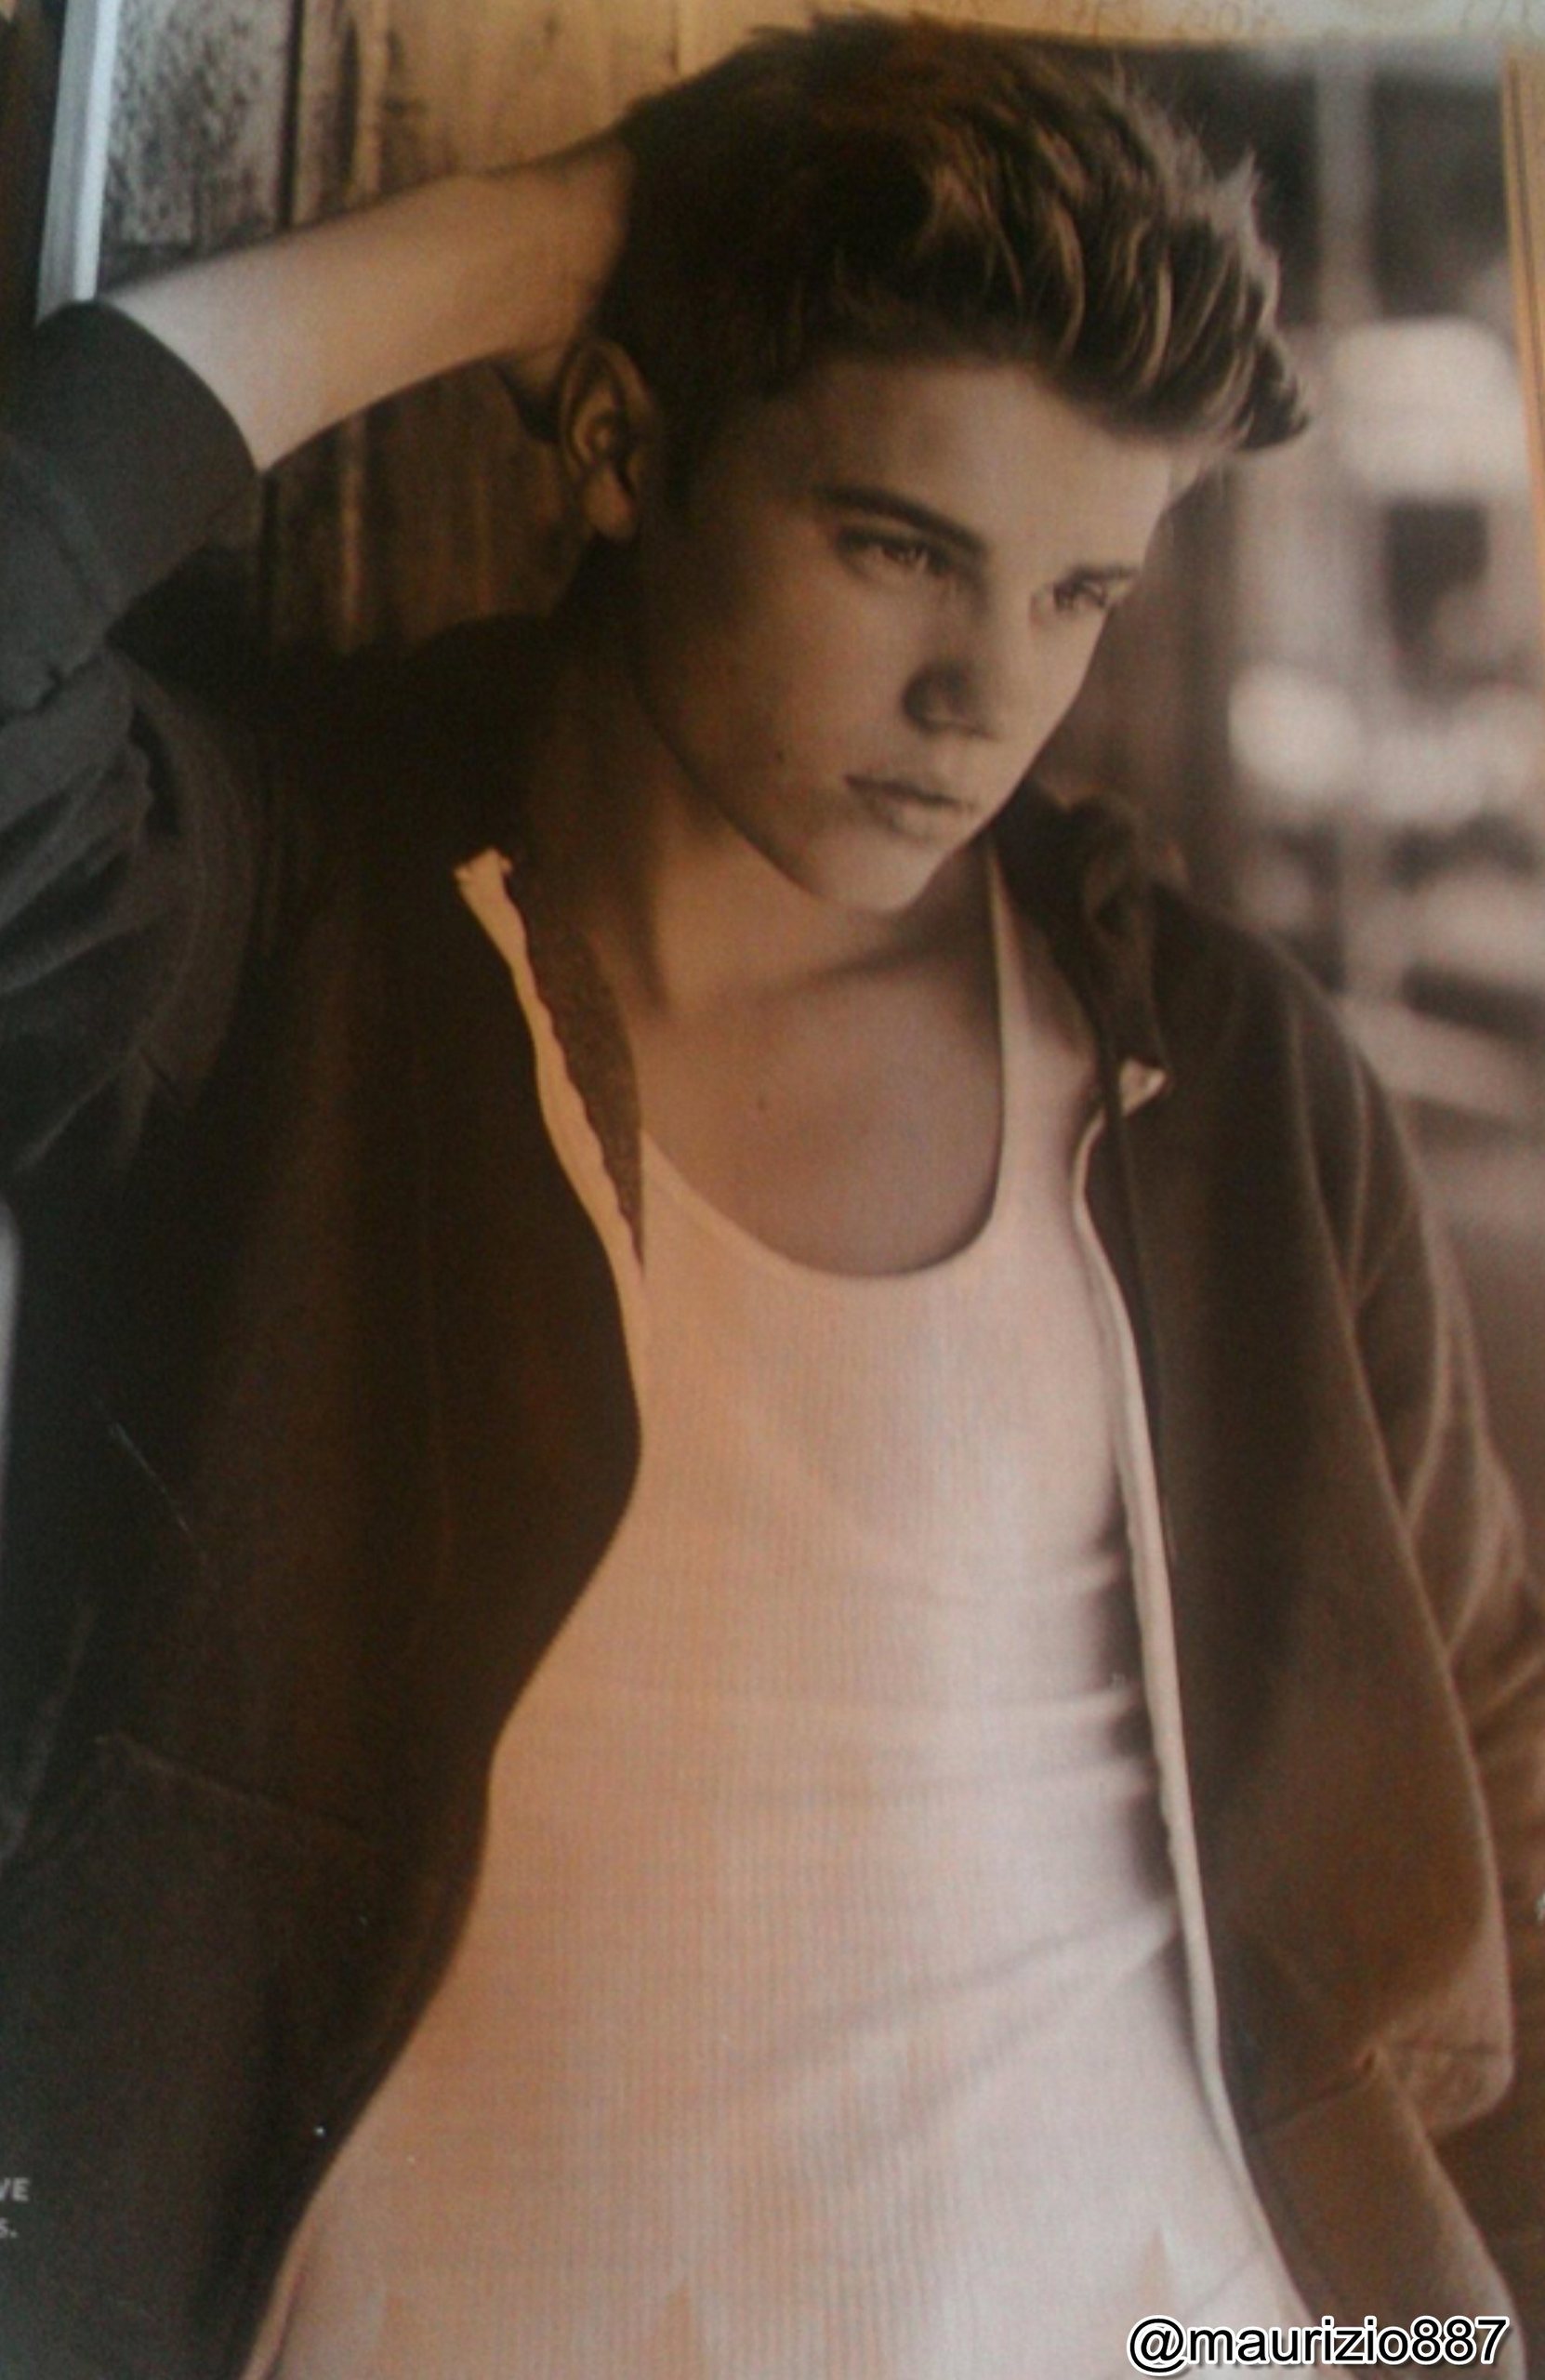 Justin Bieber Rolling Stone Photoshoot 2012